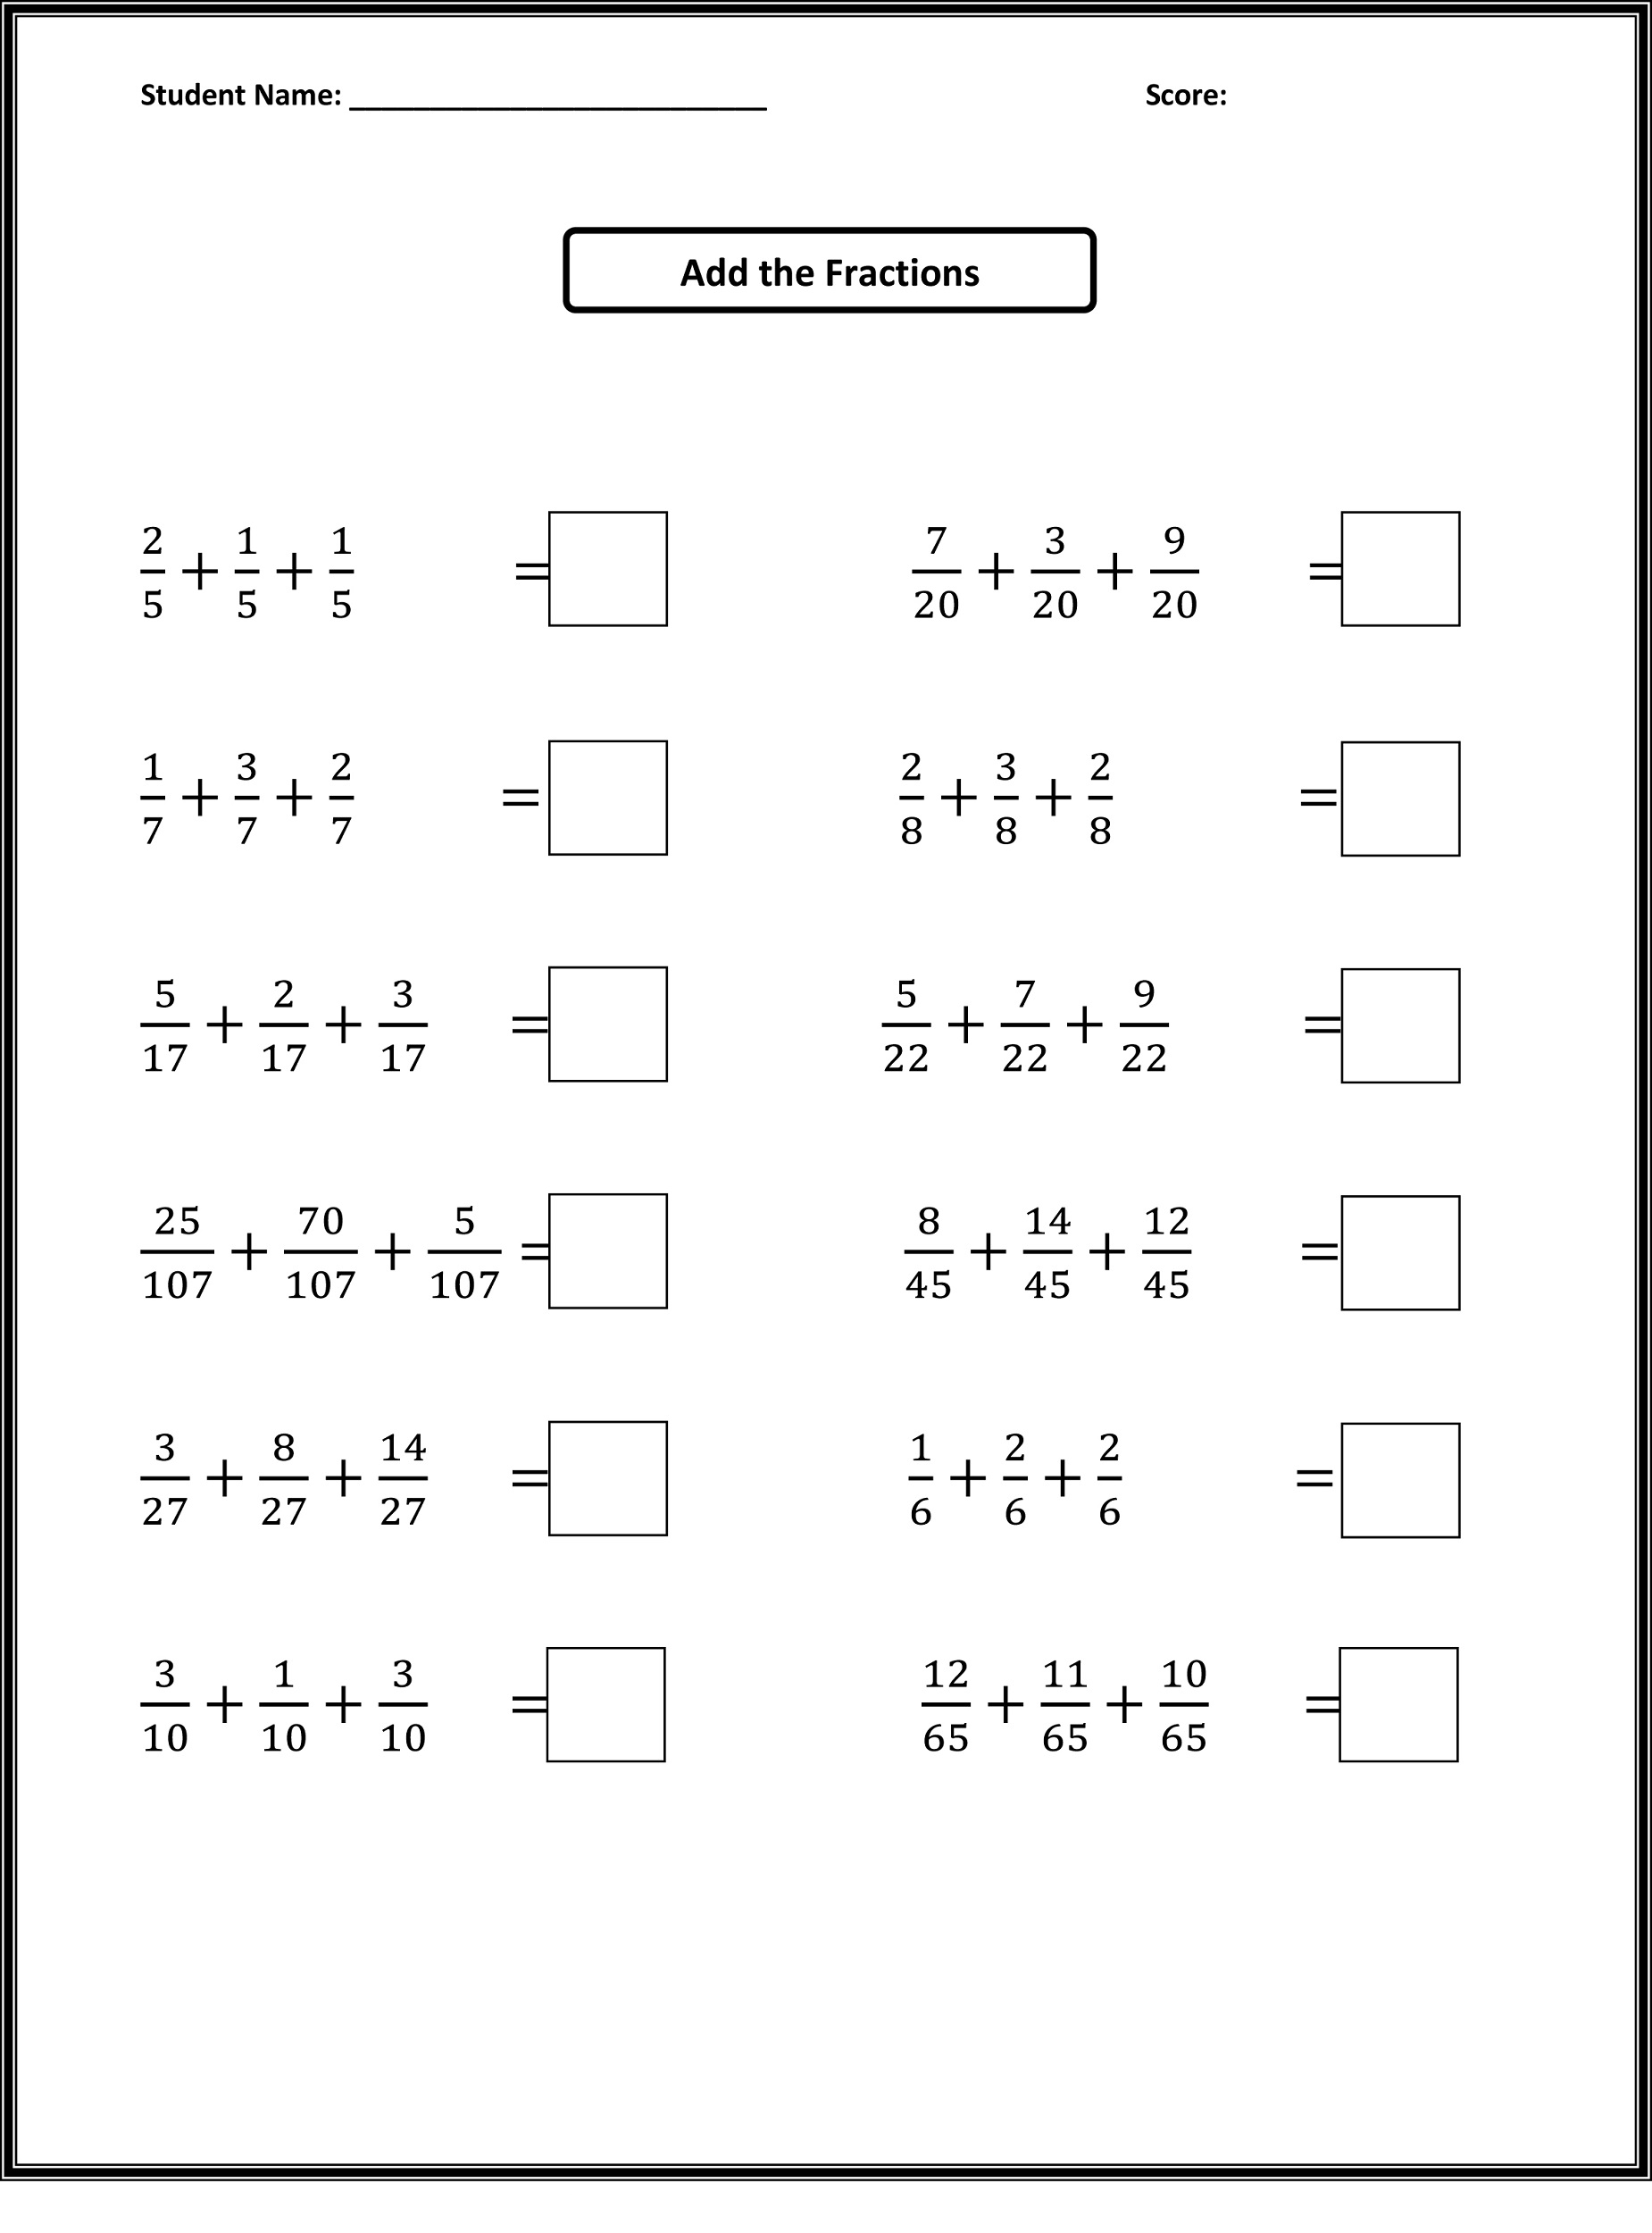 free-math-worksheets-for-grade-4-activity-shelter